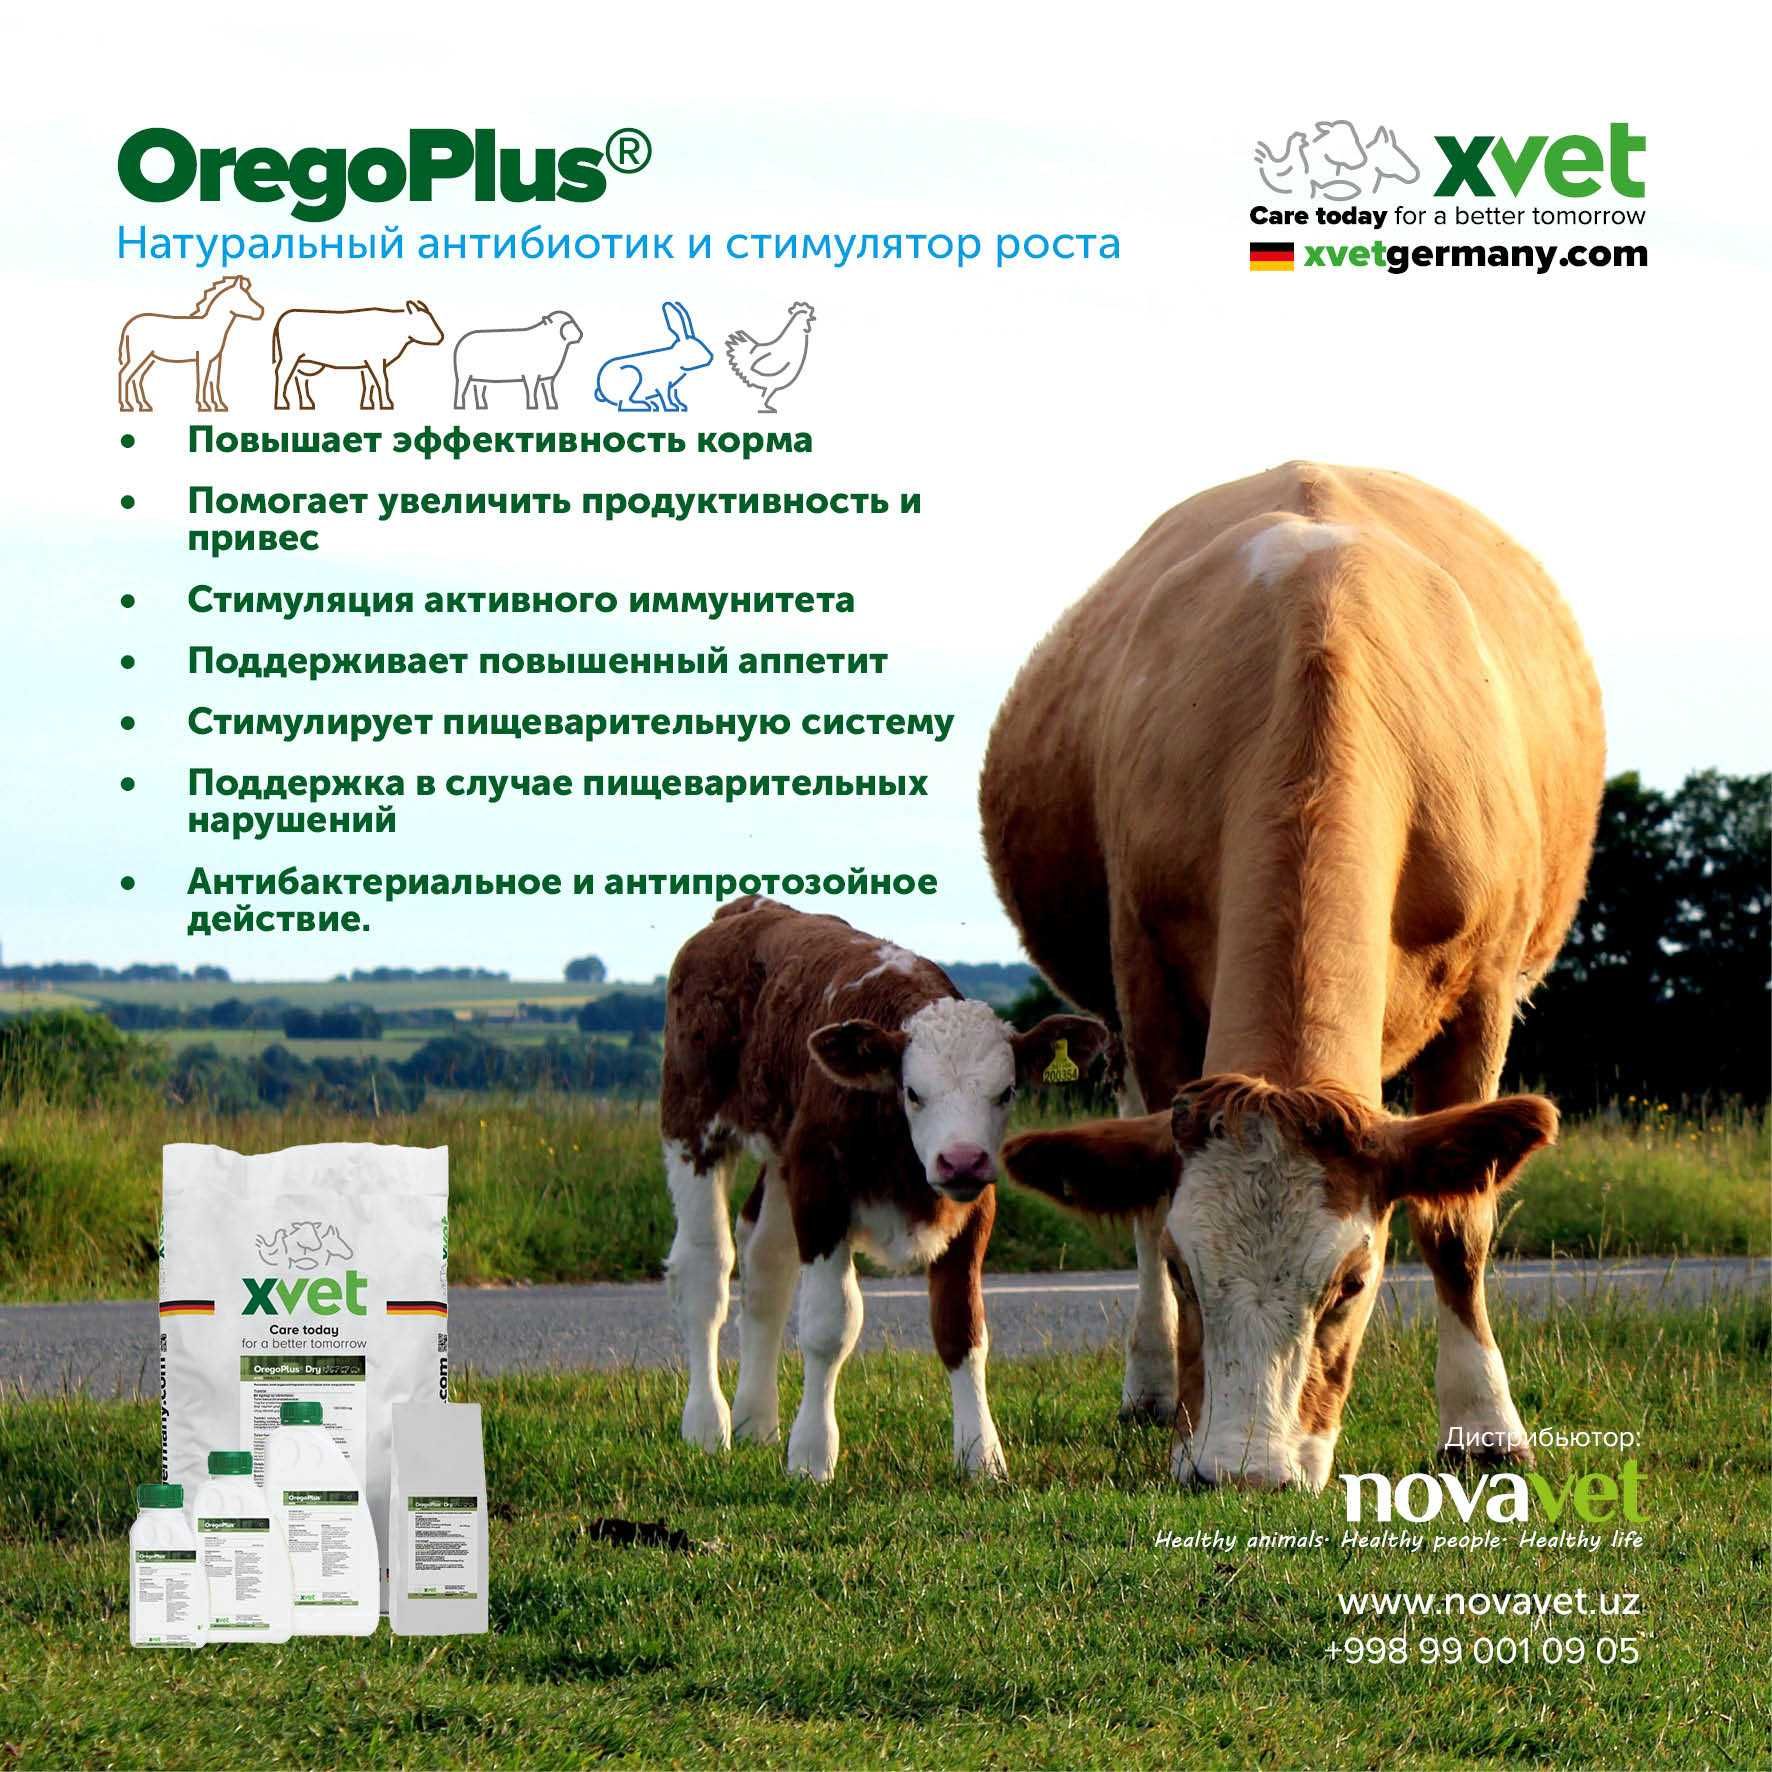 OregoPlus - Мол, куй, бройлерларни тез семиртиришга препарат